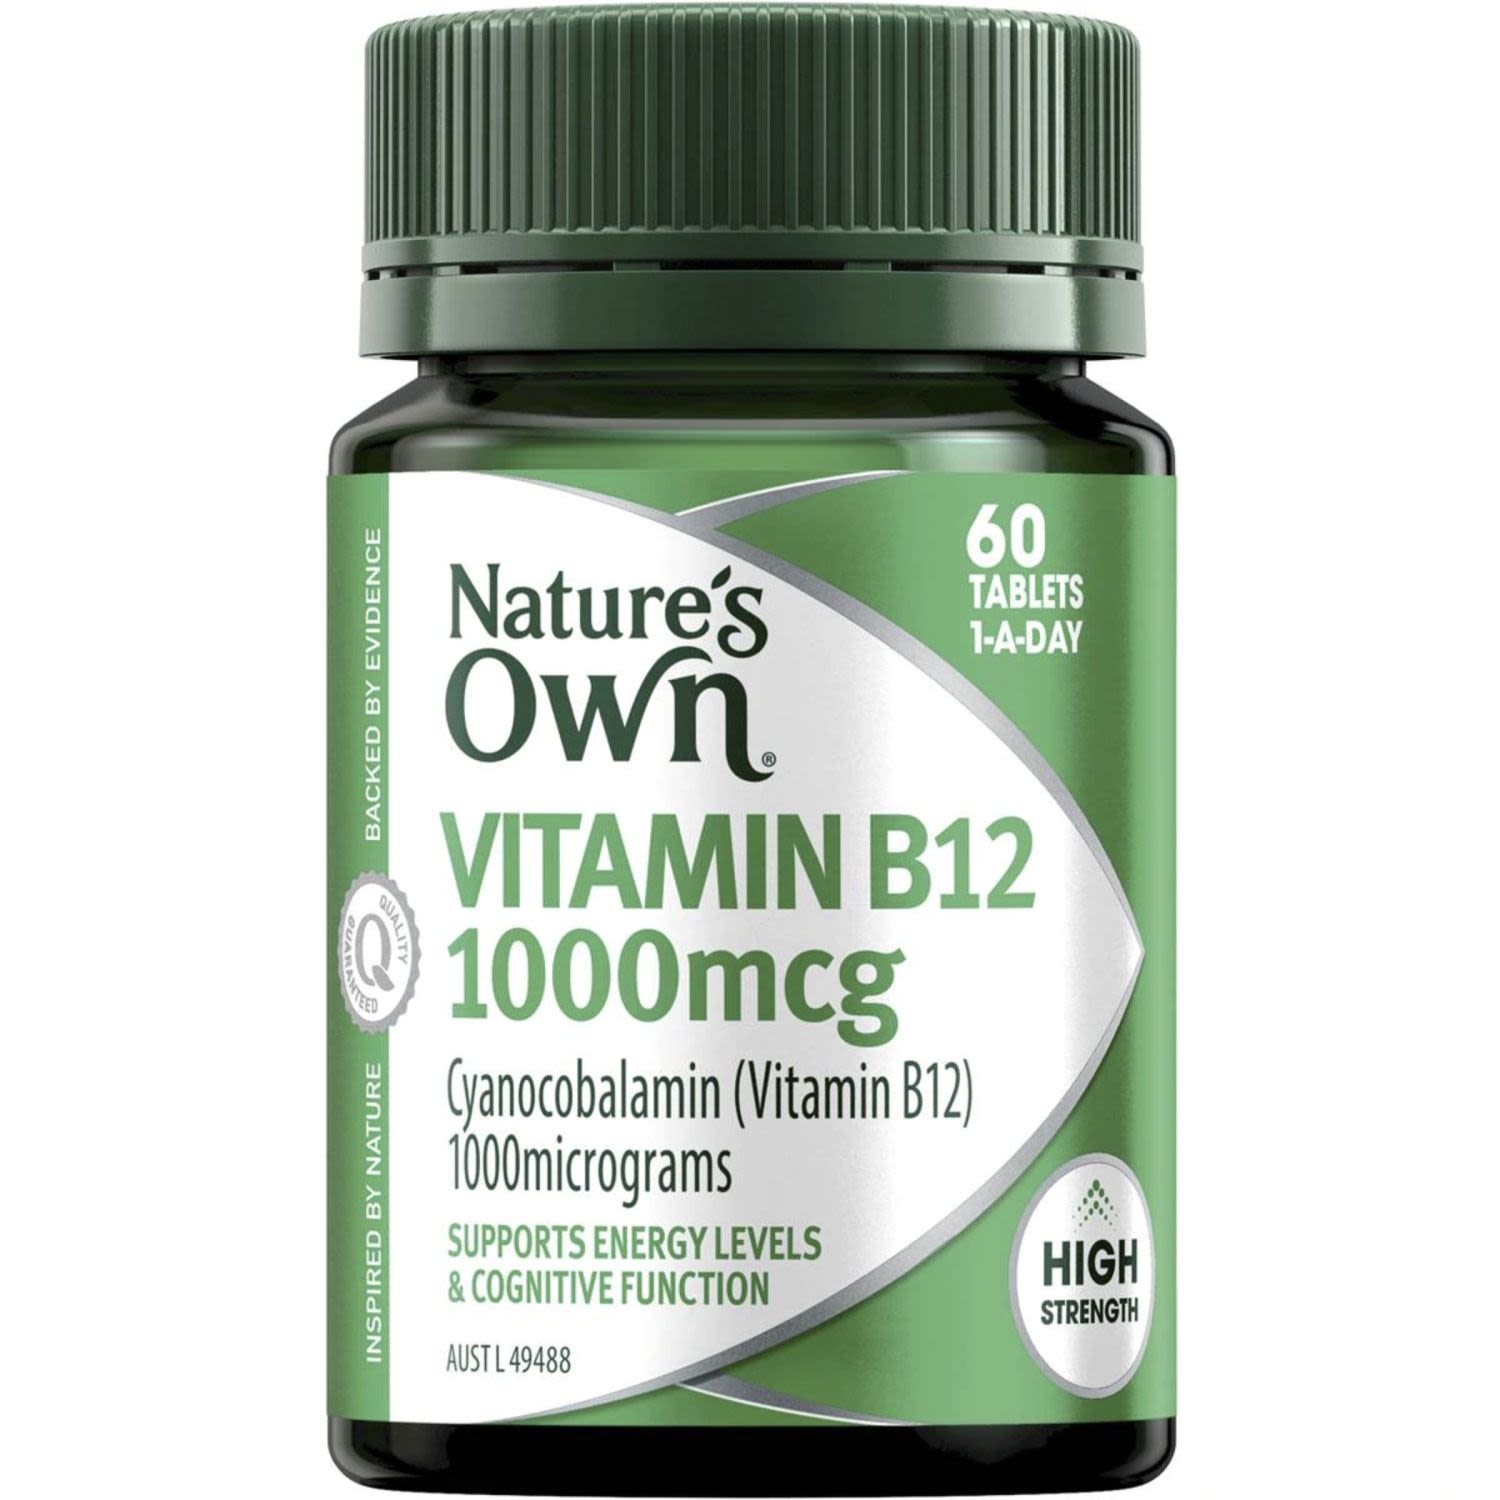 Nature's Own High Strength Vitamin B12 1000mcg Tablets, 60 Each